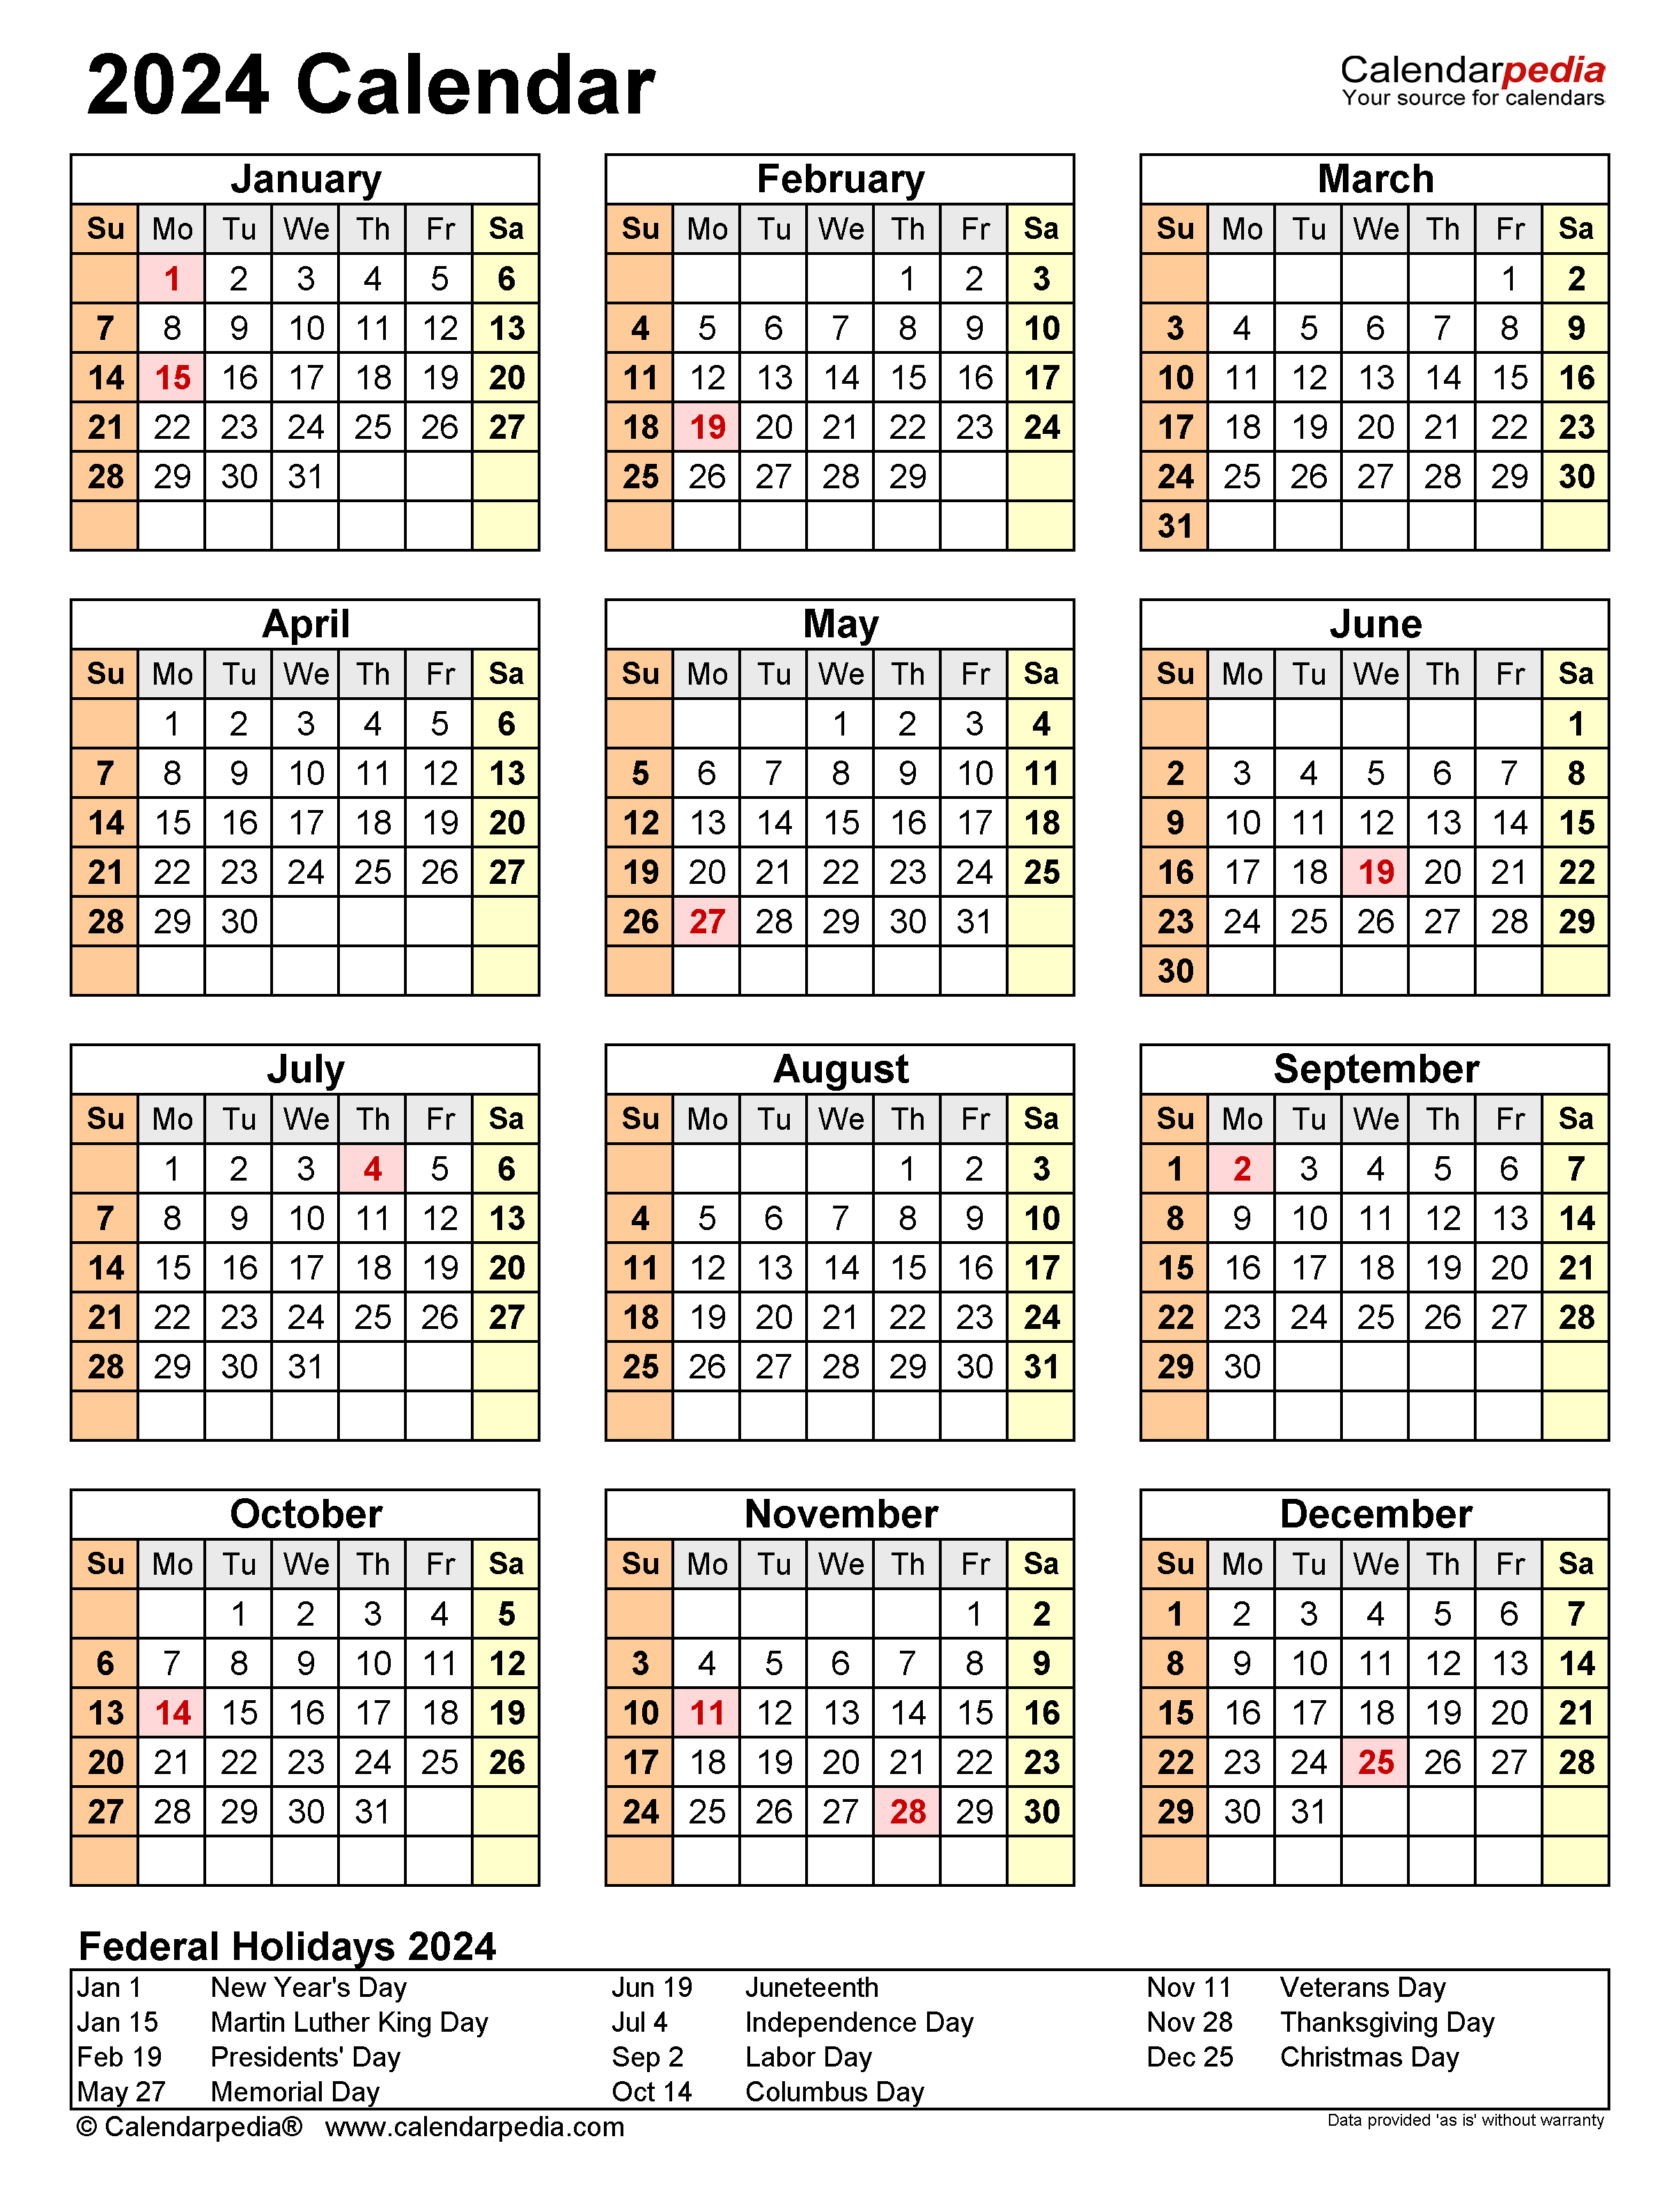 Free Printable 2024 Calendar With Holidays Crownflourmills - Free Printable 2024 Calendar With Holidays April